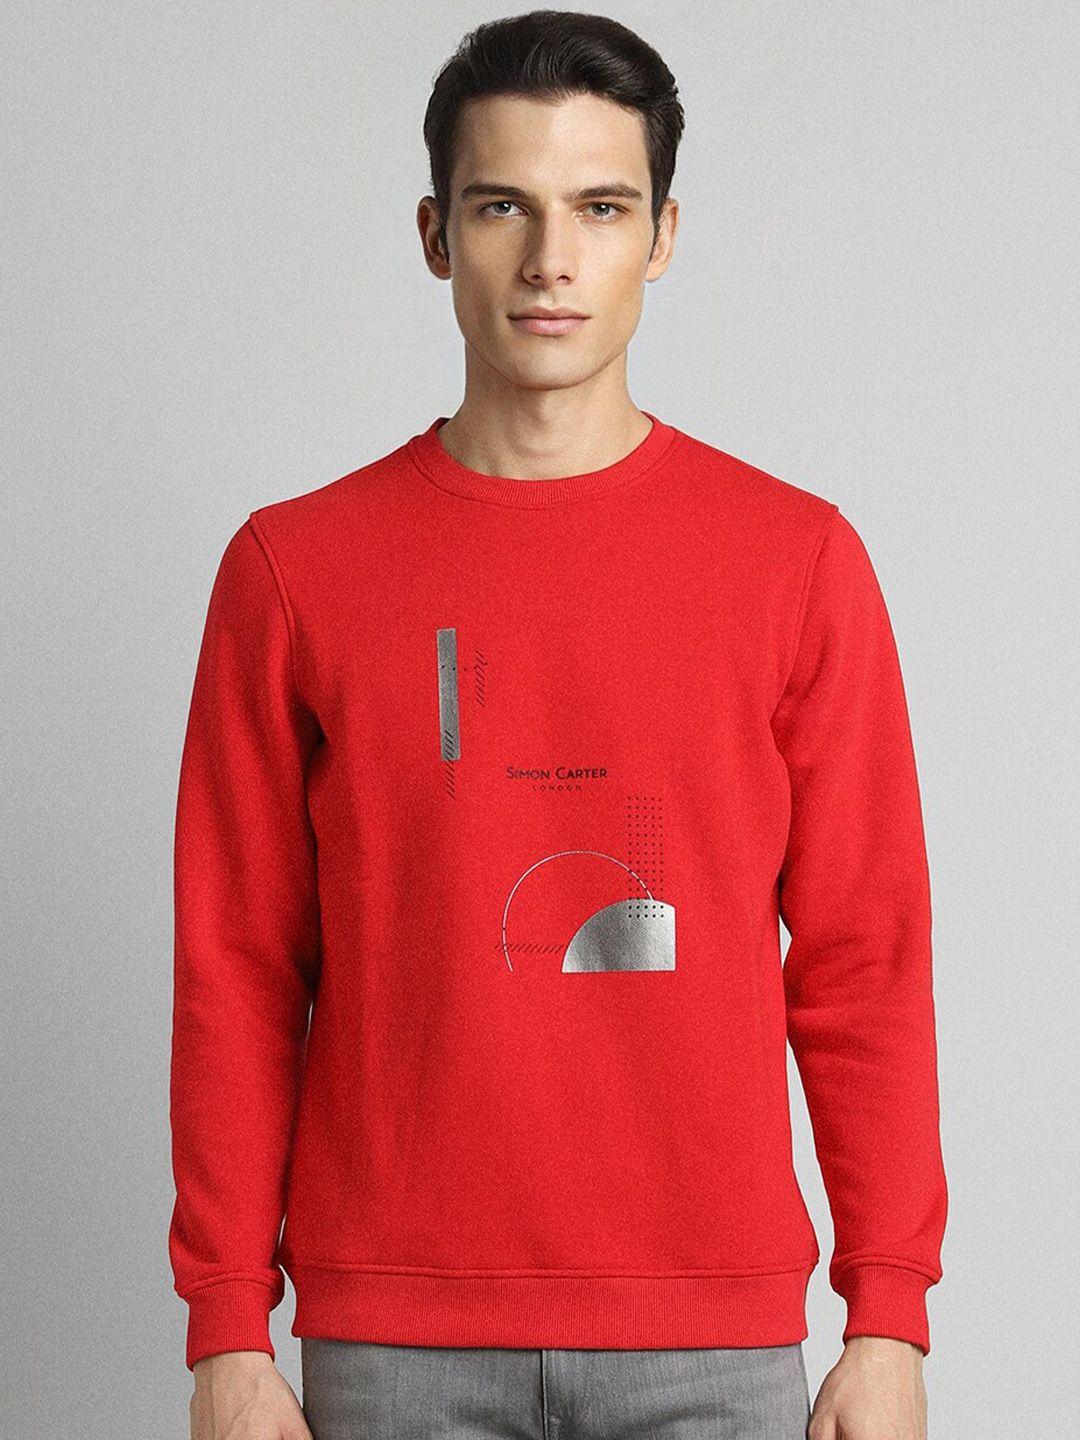 simon carter london typography printed round neck long sleeves pullover sweatshirt